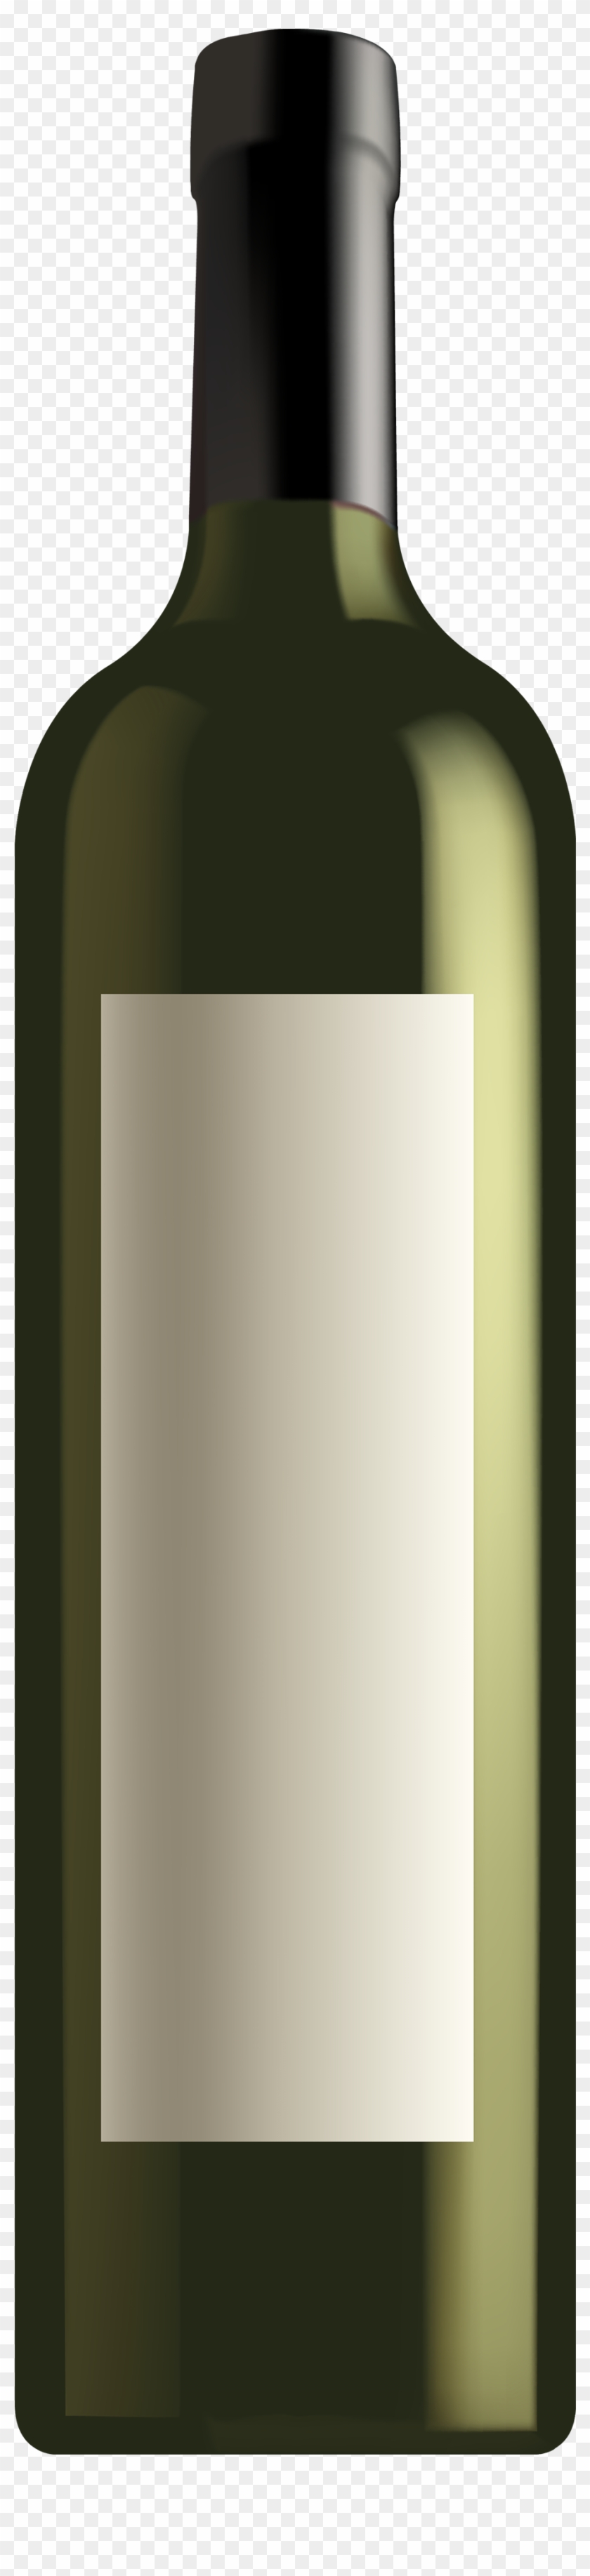 Green Wine Bottle Clipart The Clipart - Clip Art #959951